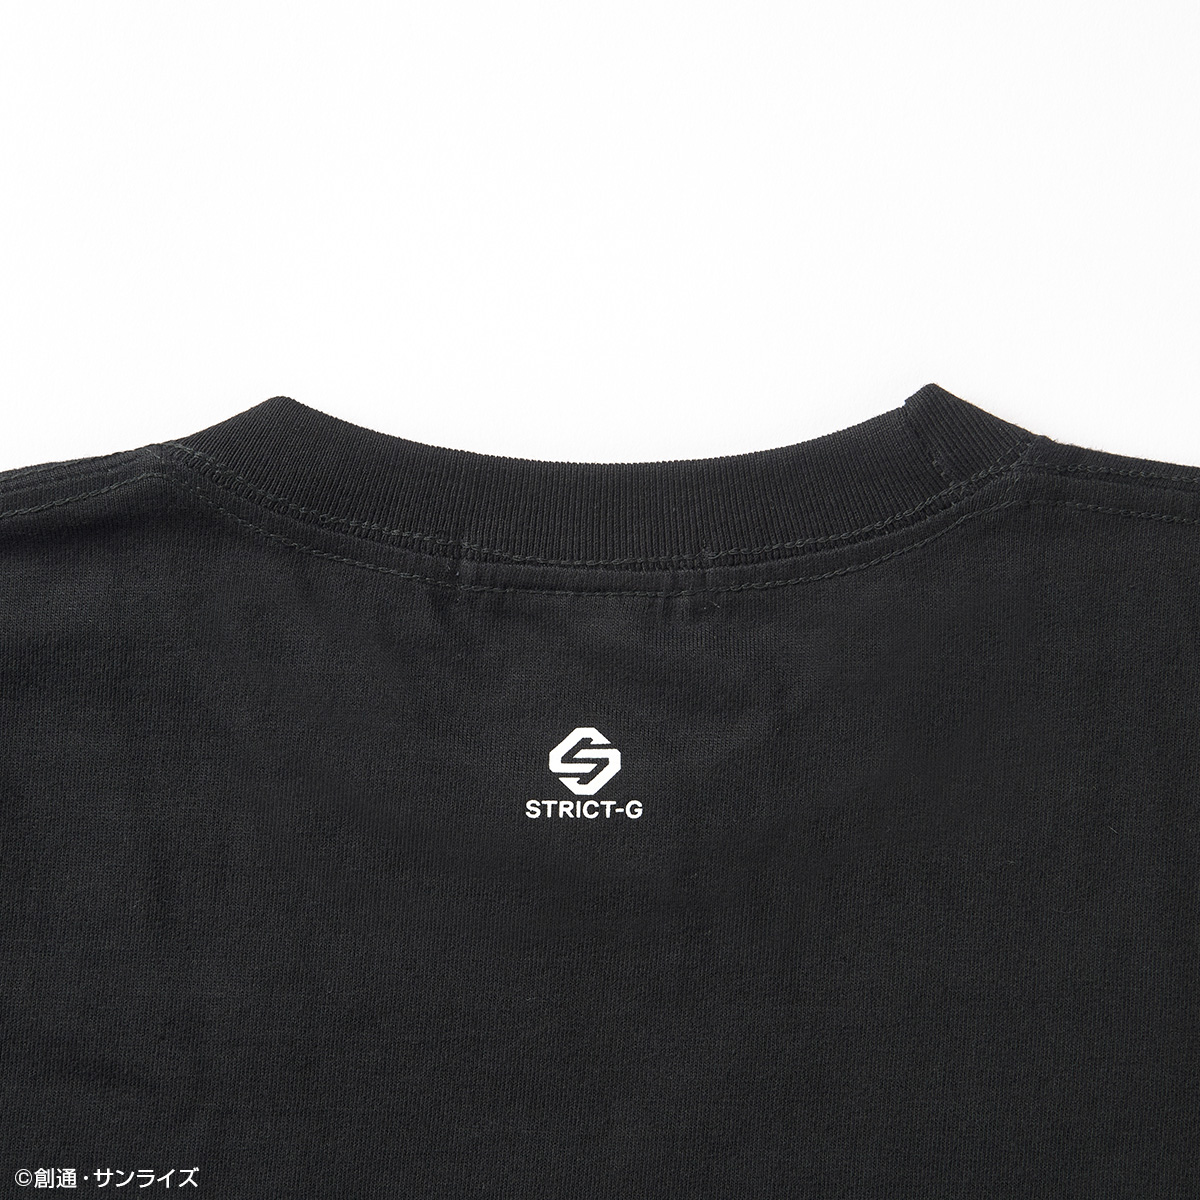 STRICT-G『機動戦士ガンダム』Tシャツコレクション CHAR AZNABLE 003